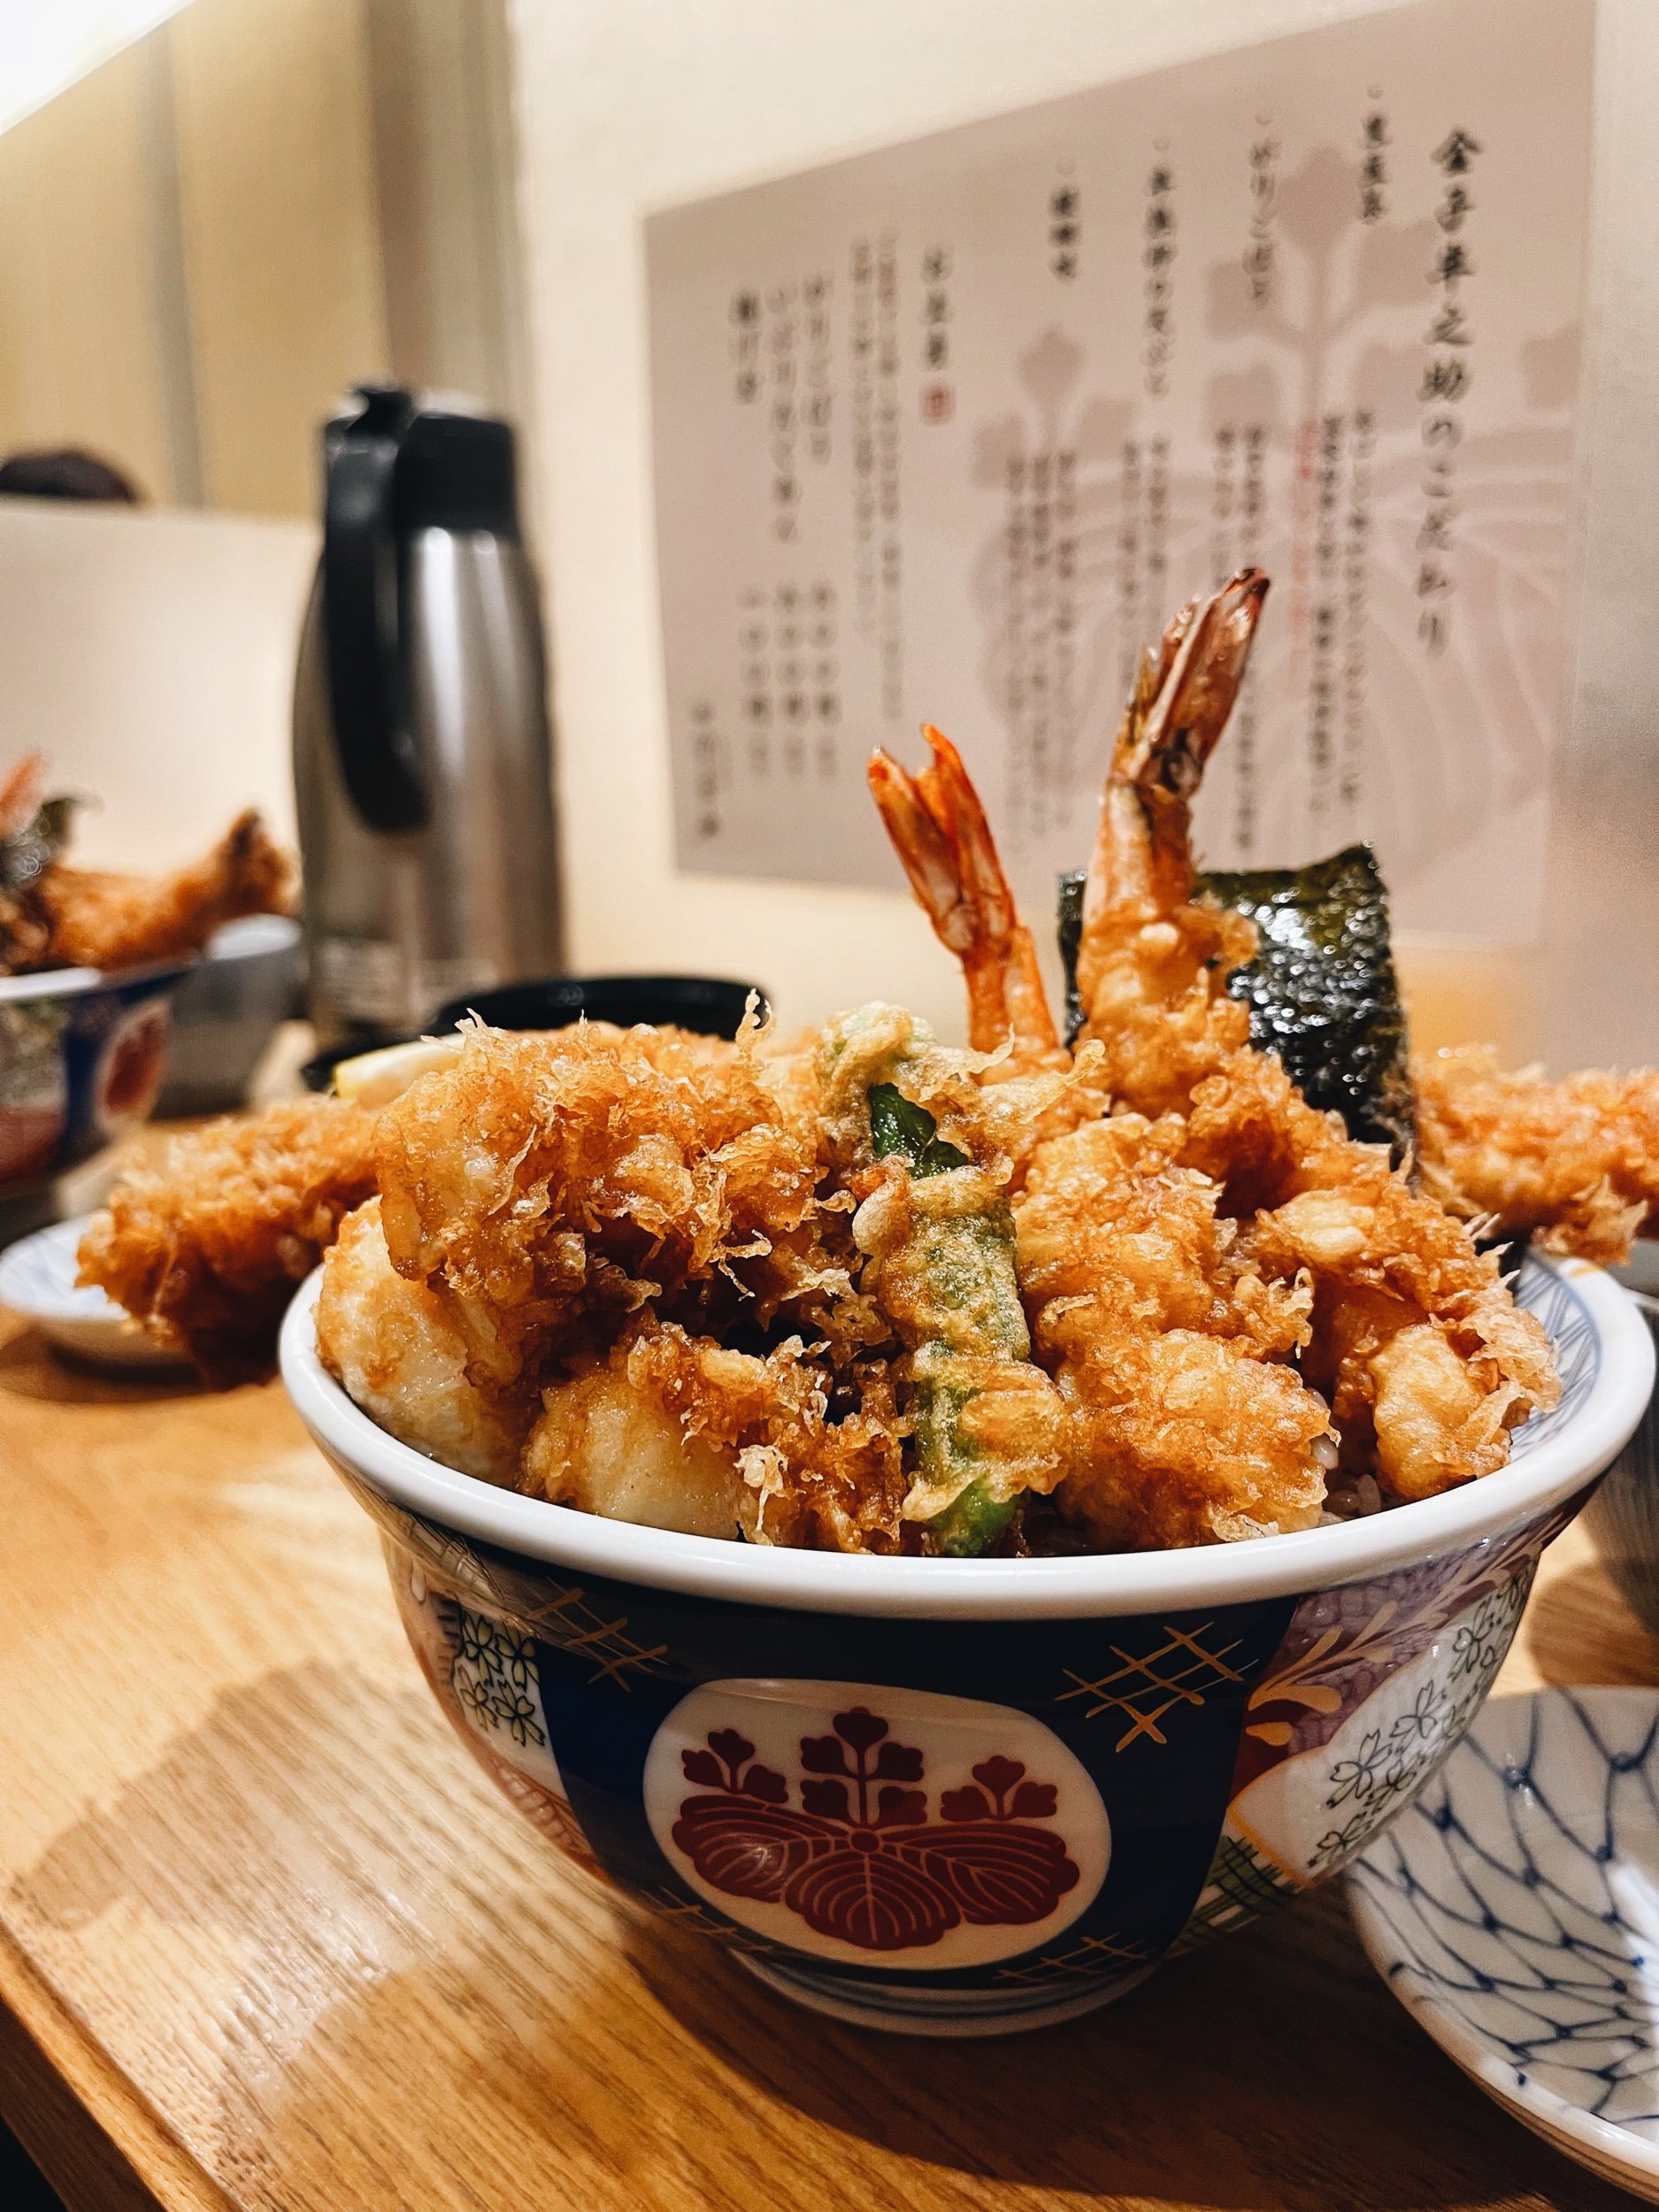 First bite of tempura